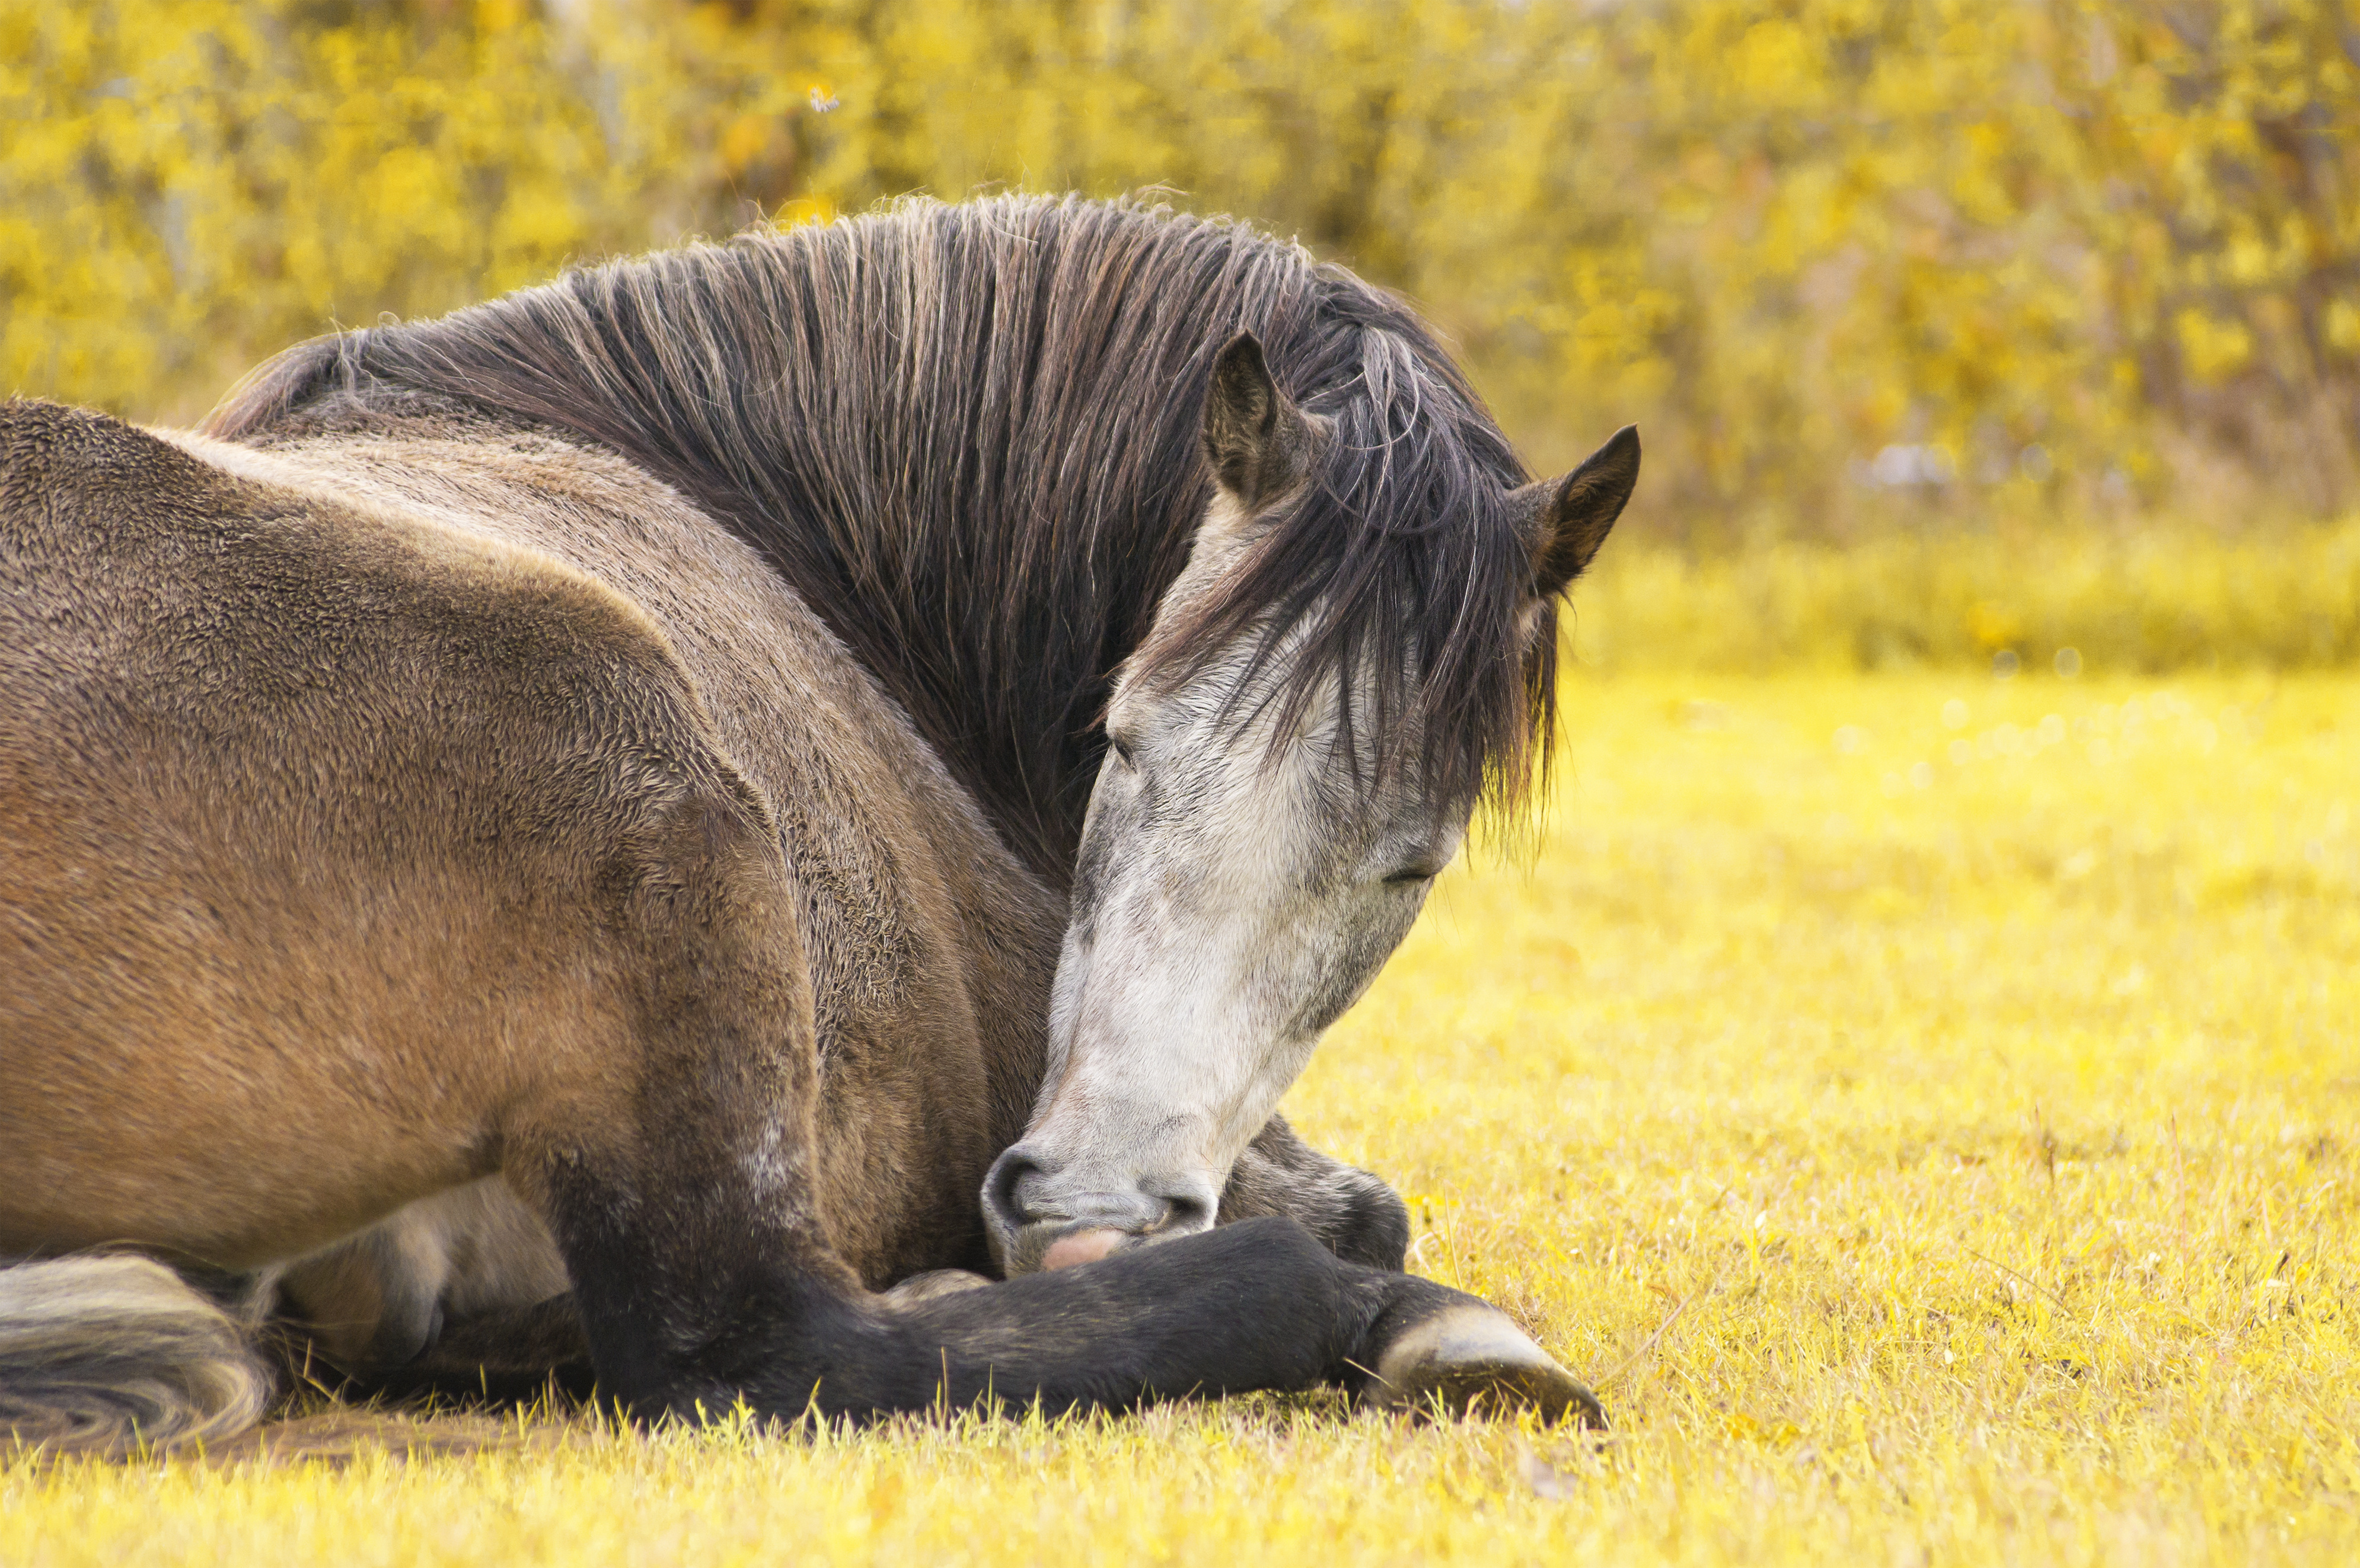 A horse asleep in a field.